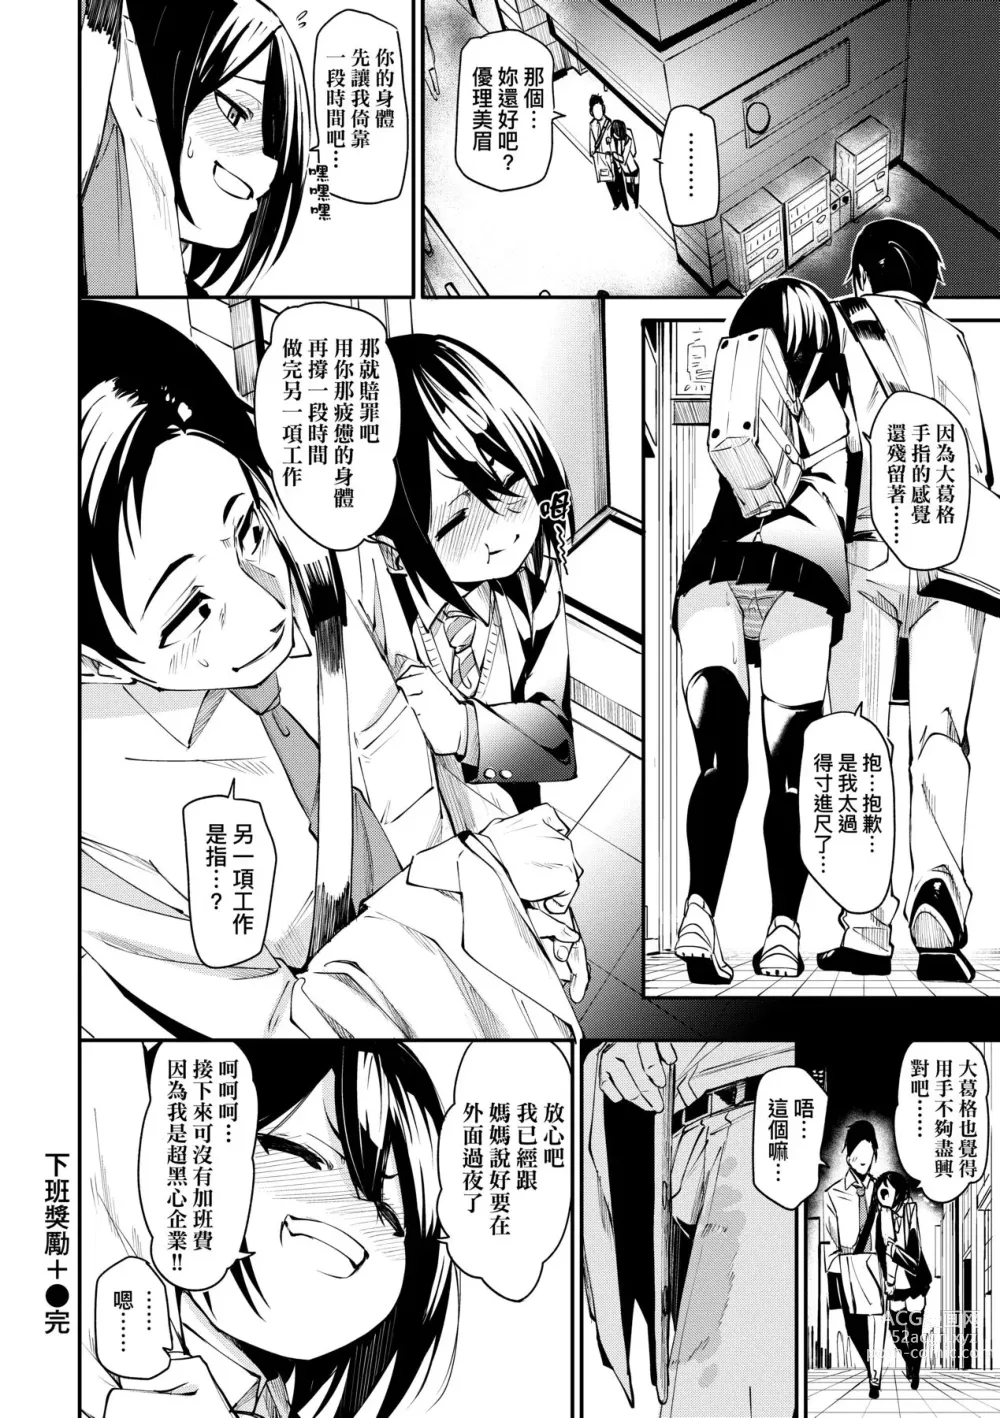 Page 194 of manga 思春少女夜有所夢 (decensored)